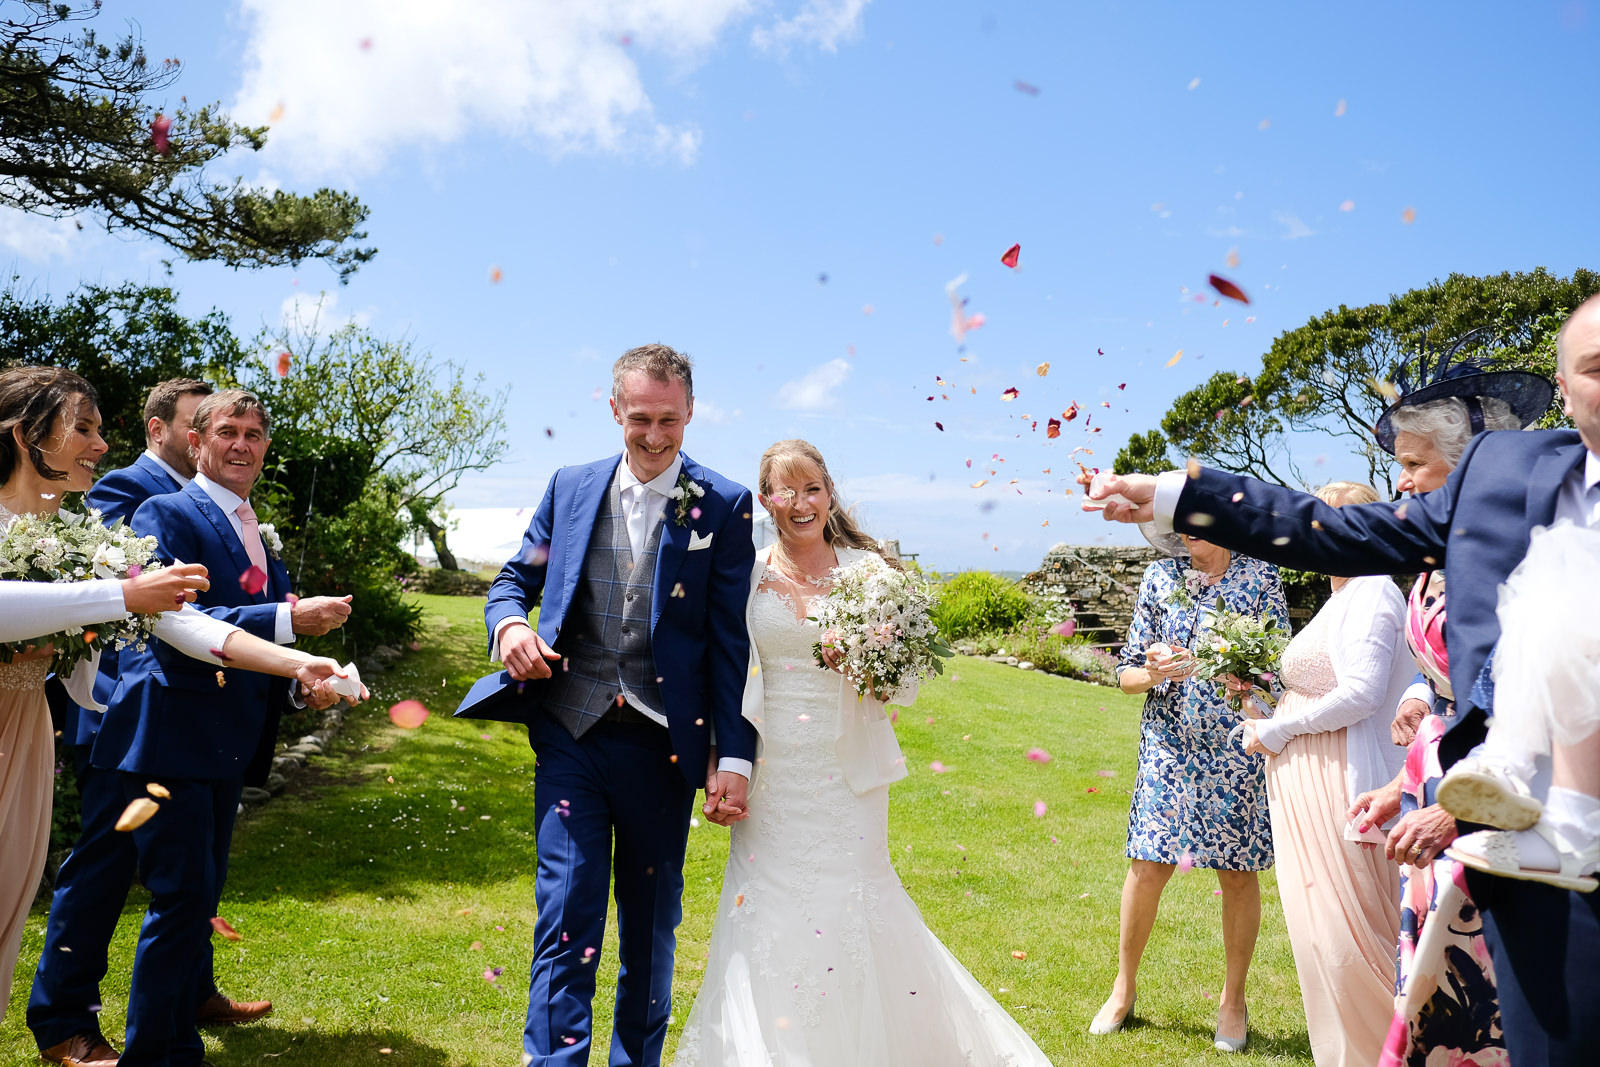 Roscarrock Farm wedding in Cornwall 038.jpg